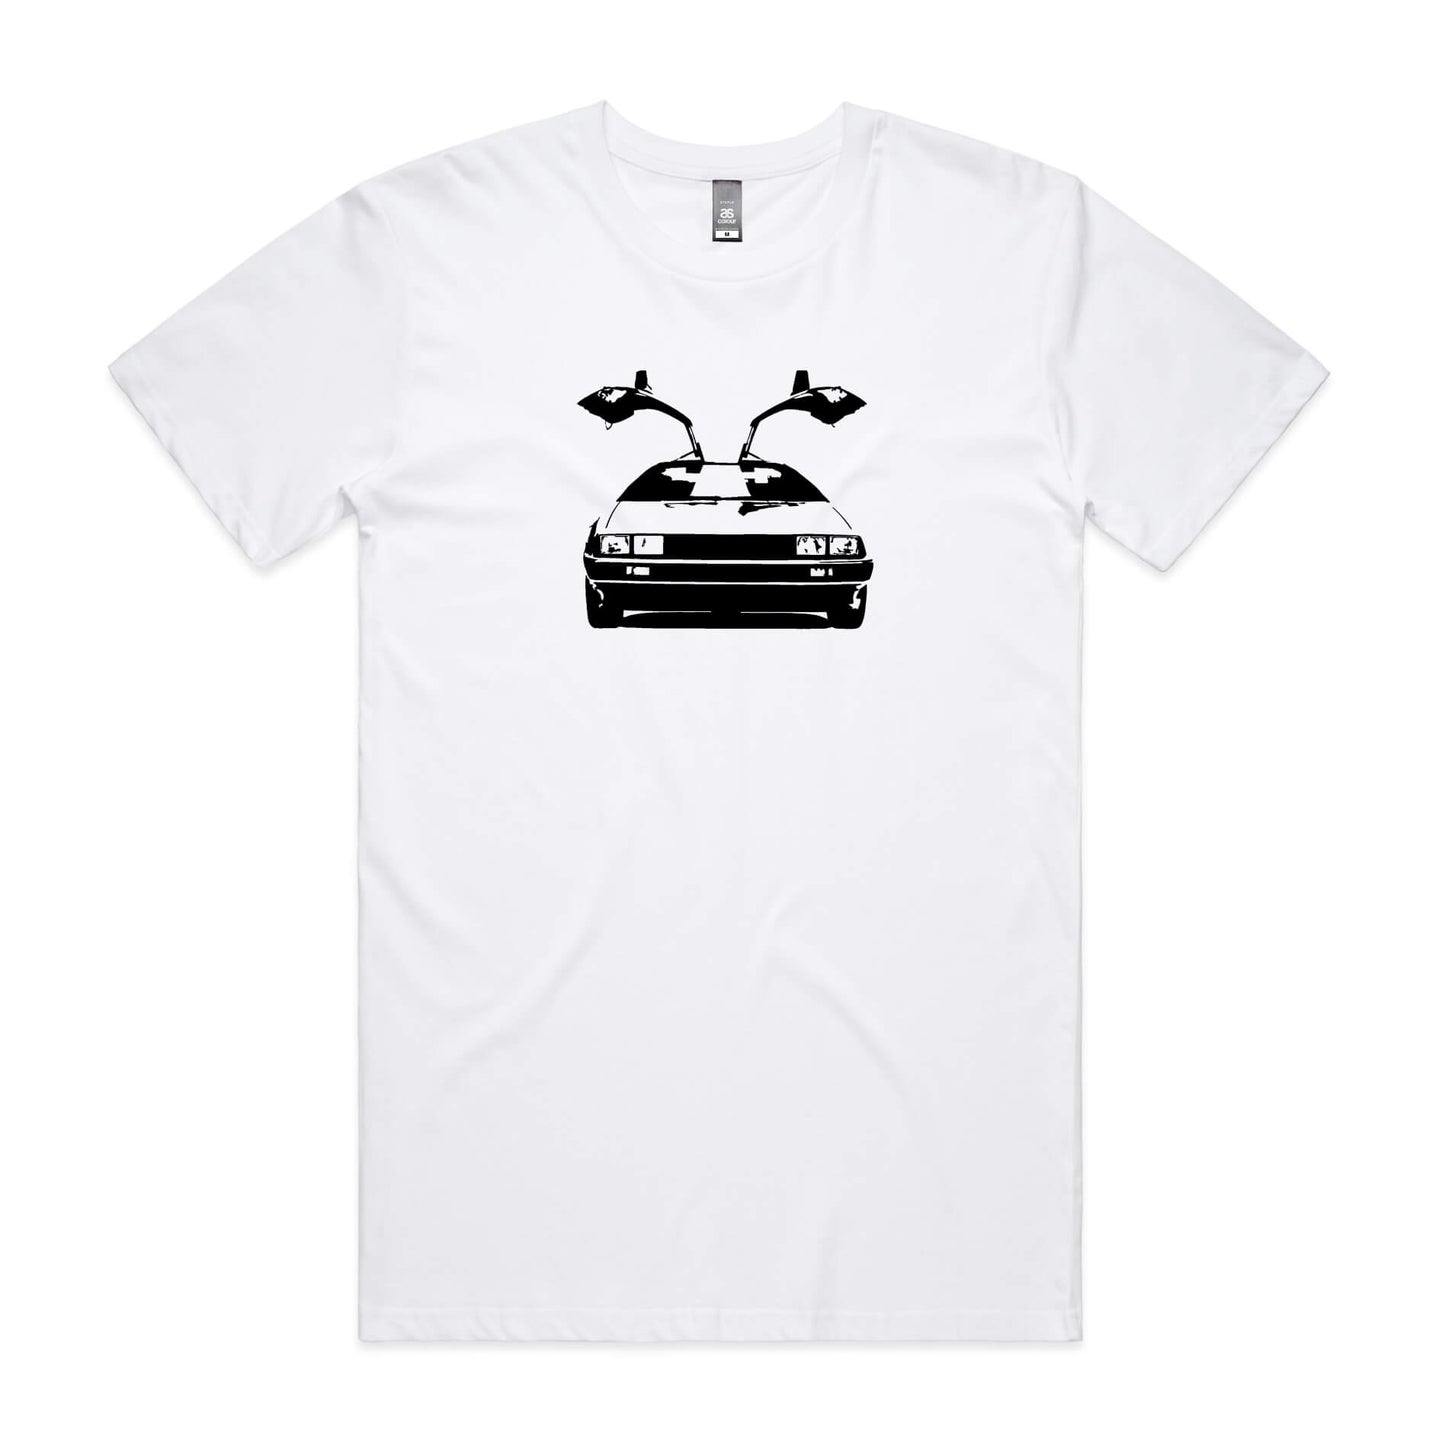 DeLorean t-shirt in white with black DMC-12 car graphic